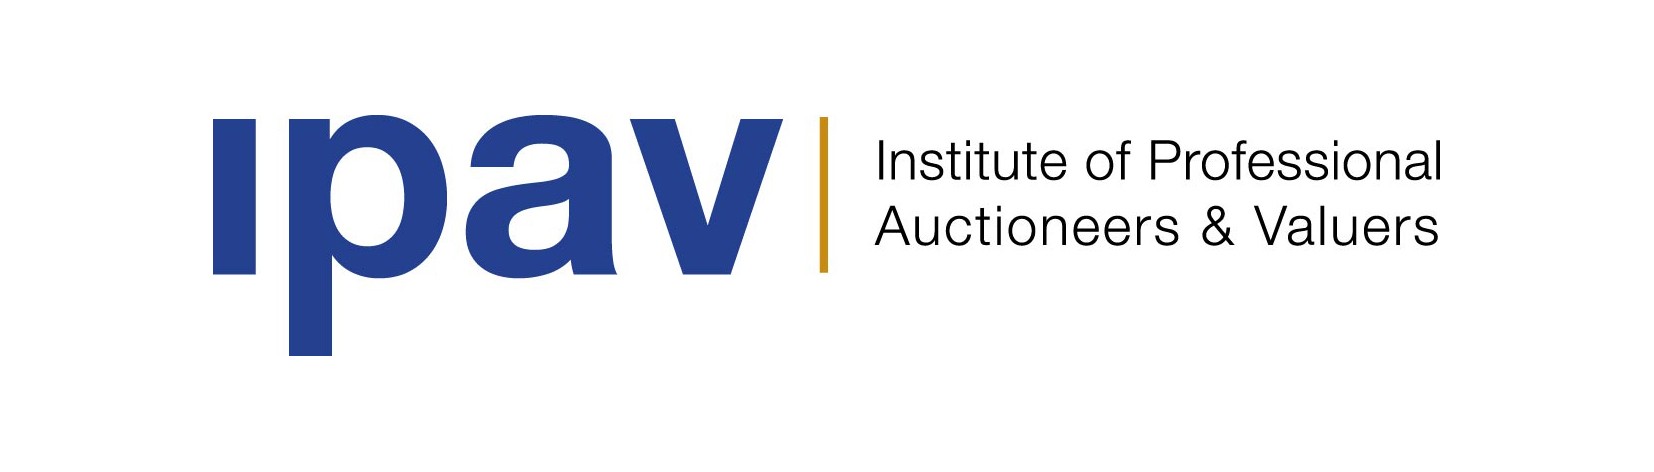 Ipav logo